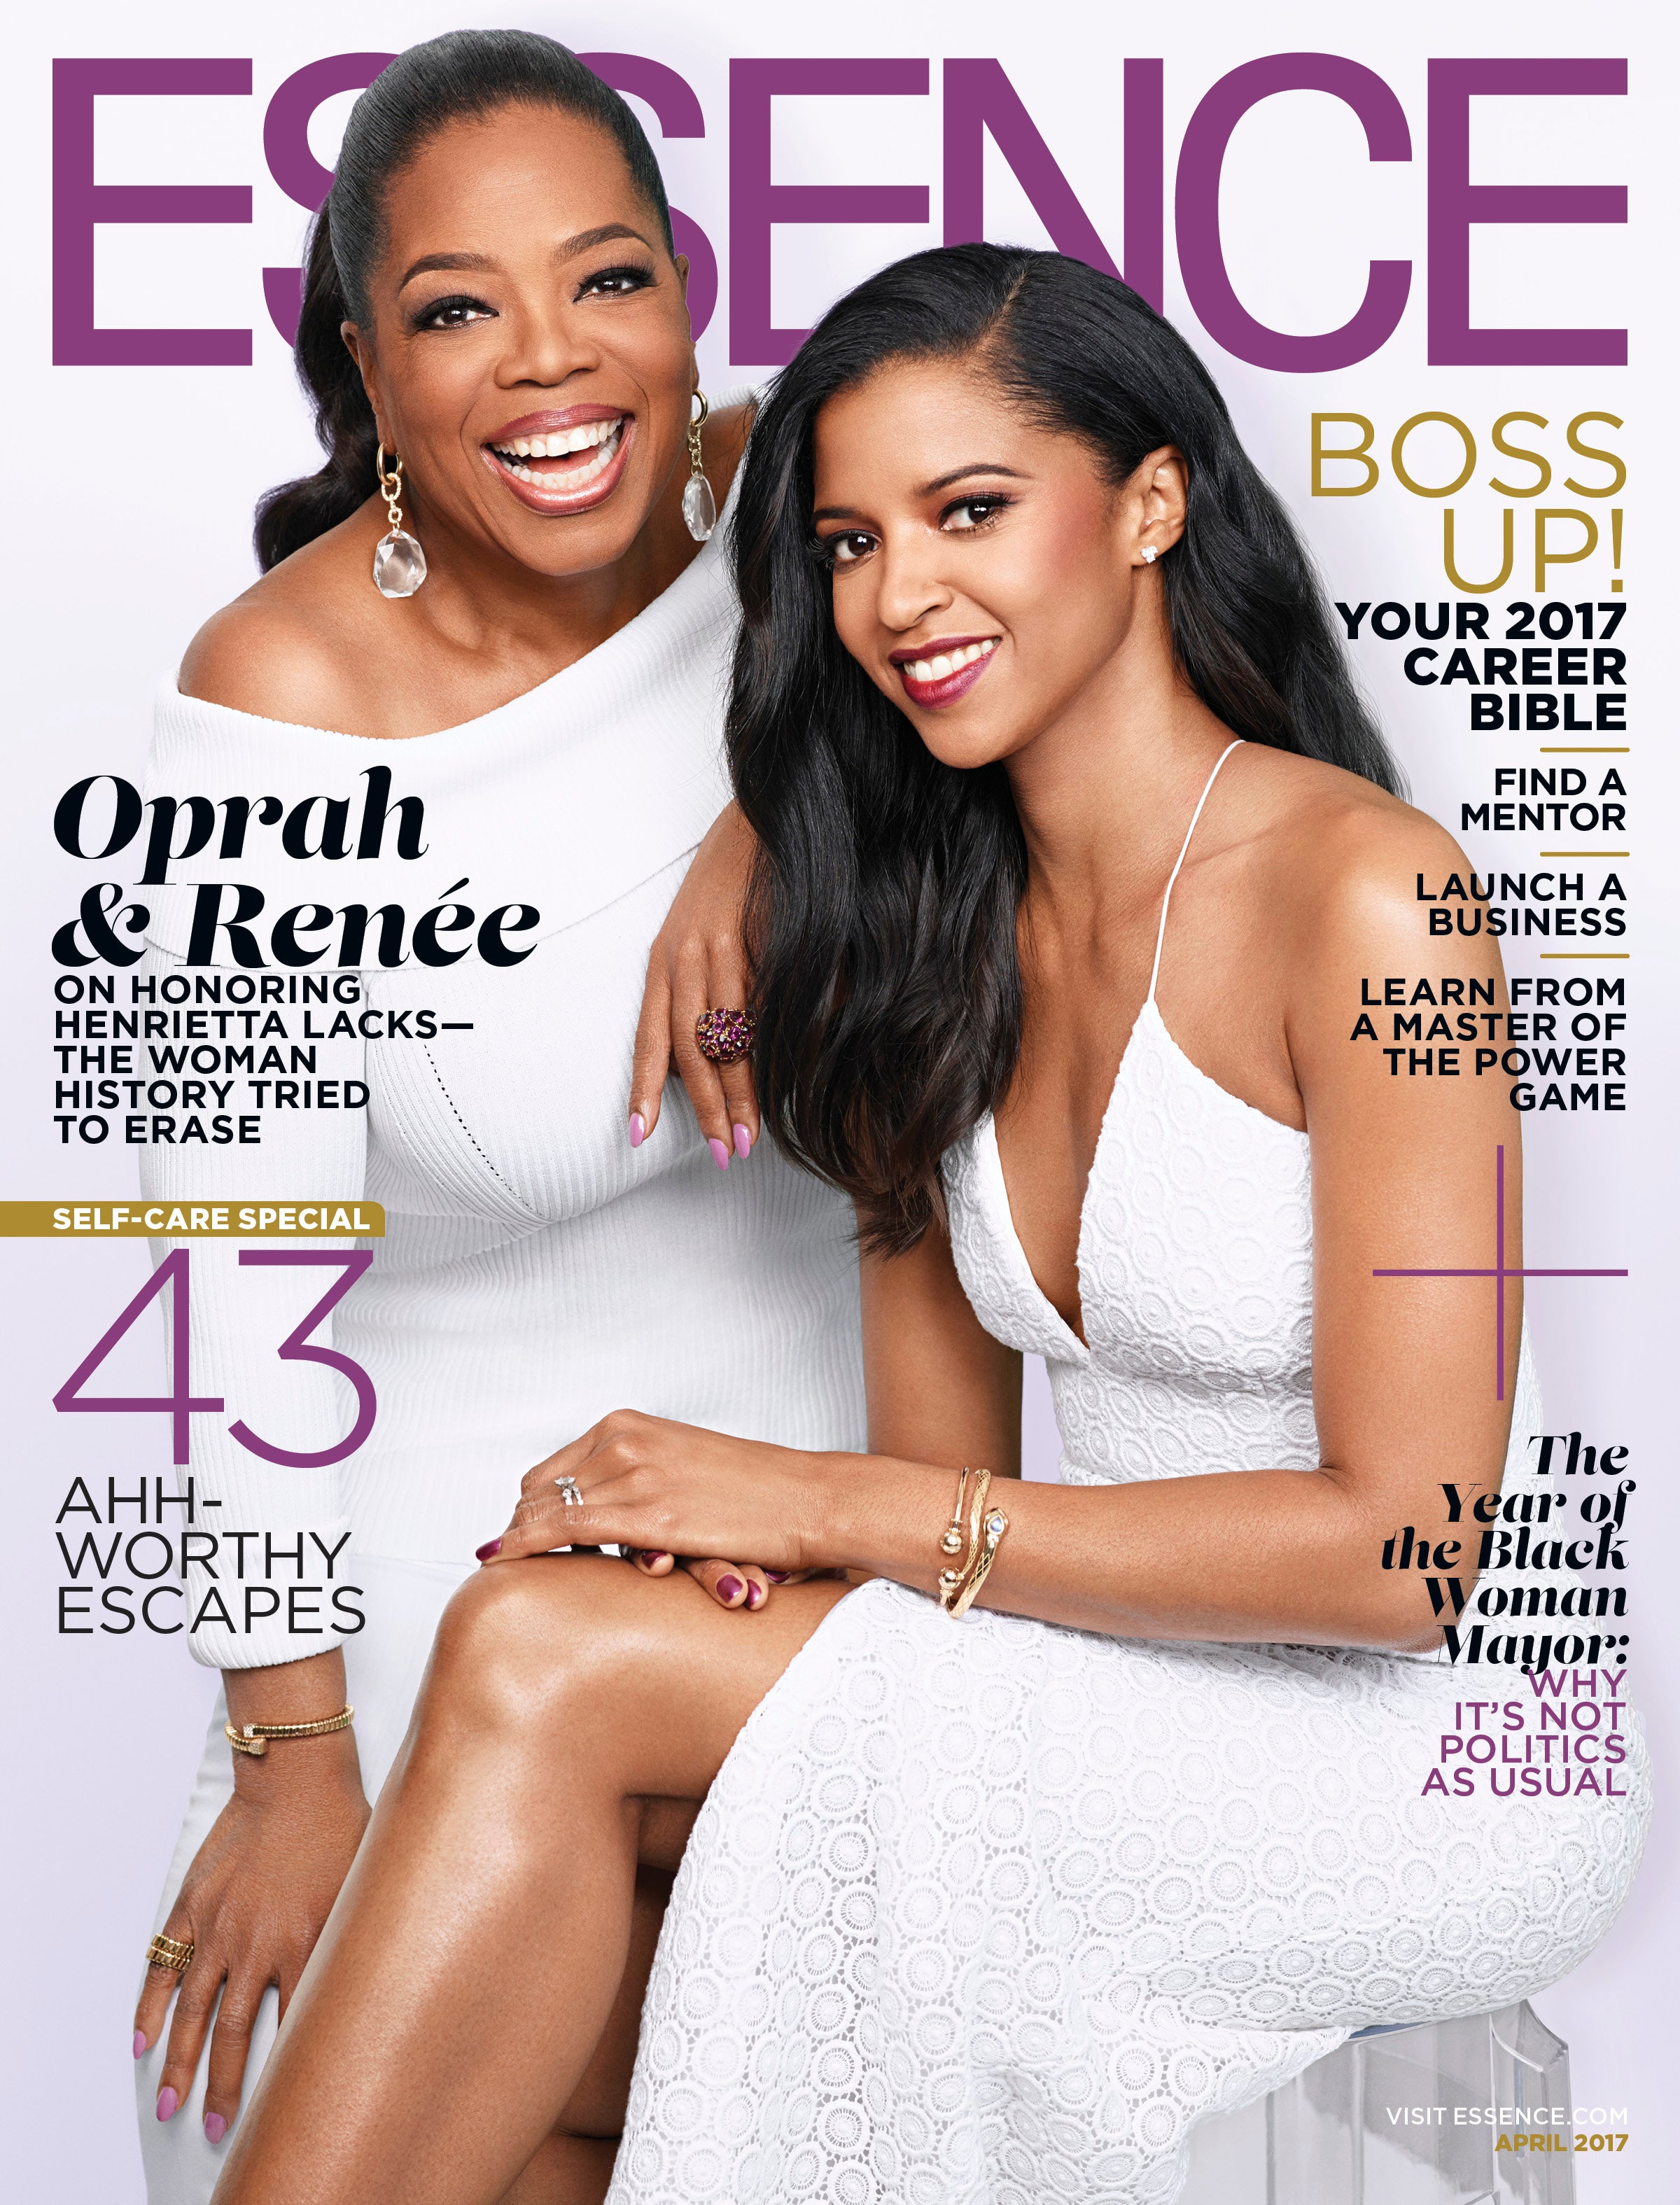 Oprah & Renée Elise Goldsberry Cover ESSENCE's April 2017 Issue
